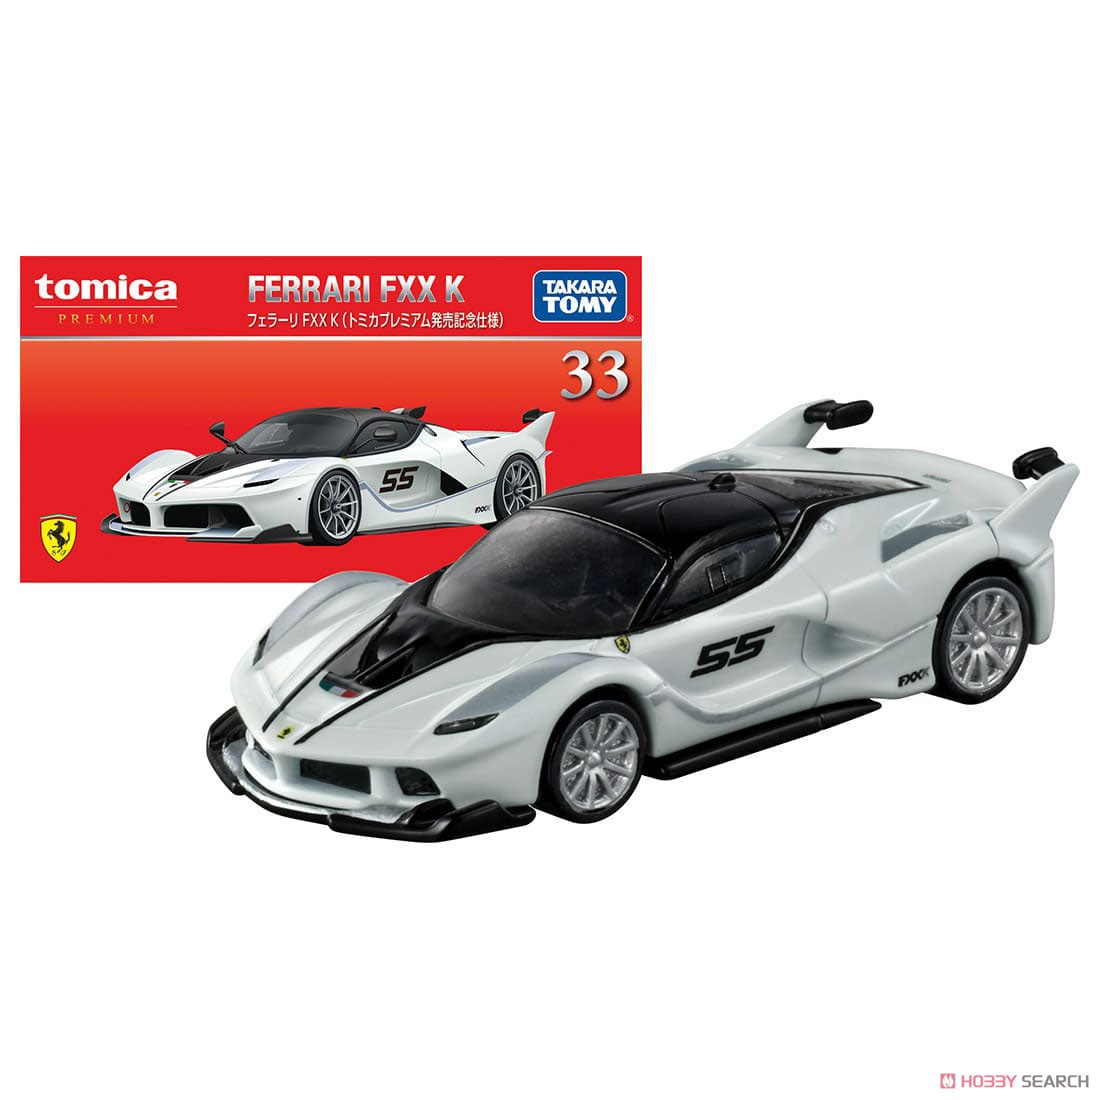 Tomica Premium 33 Ferrari FXX K (Tomica Premium Launch Specification) (Tomica) Other picture1